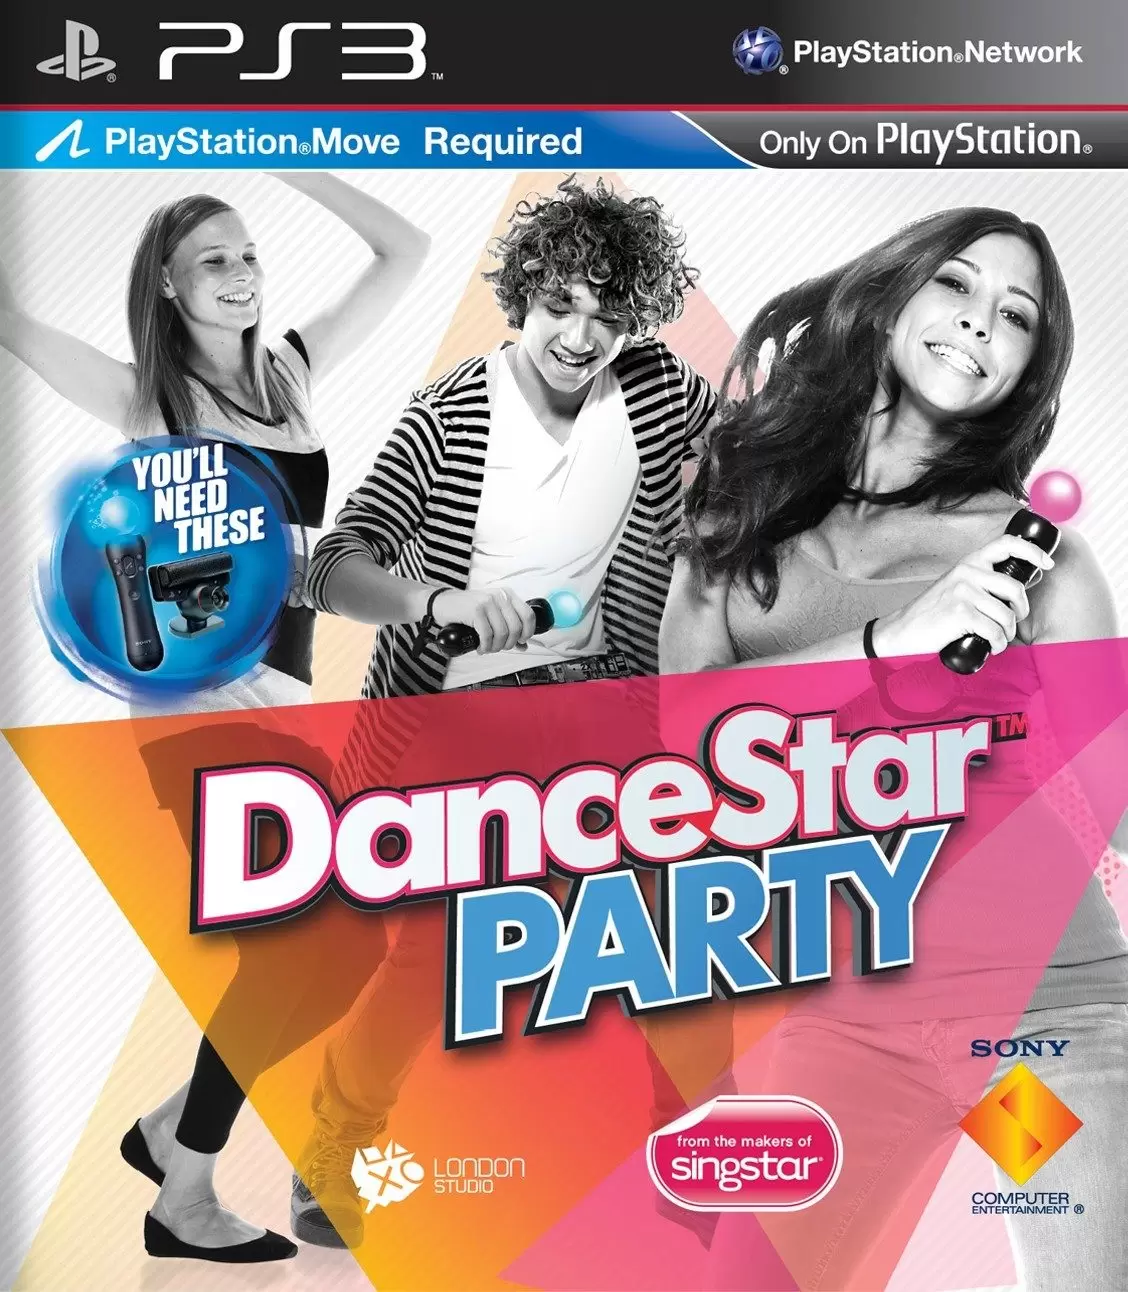 PS3 Games - DanceStar Party